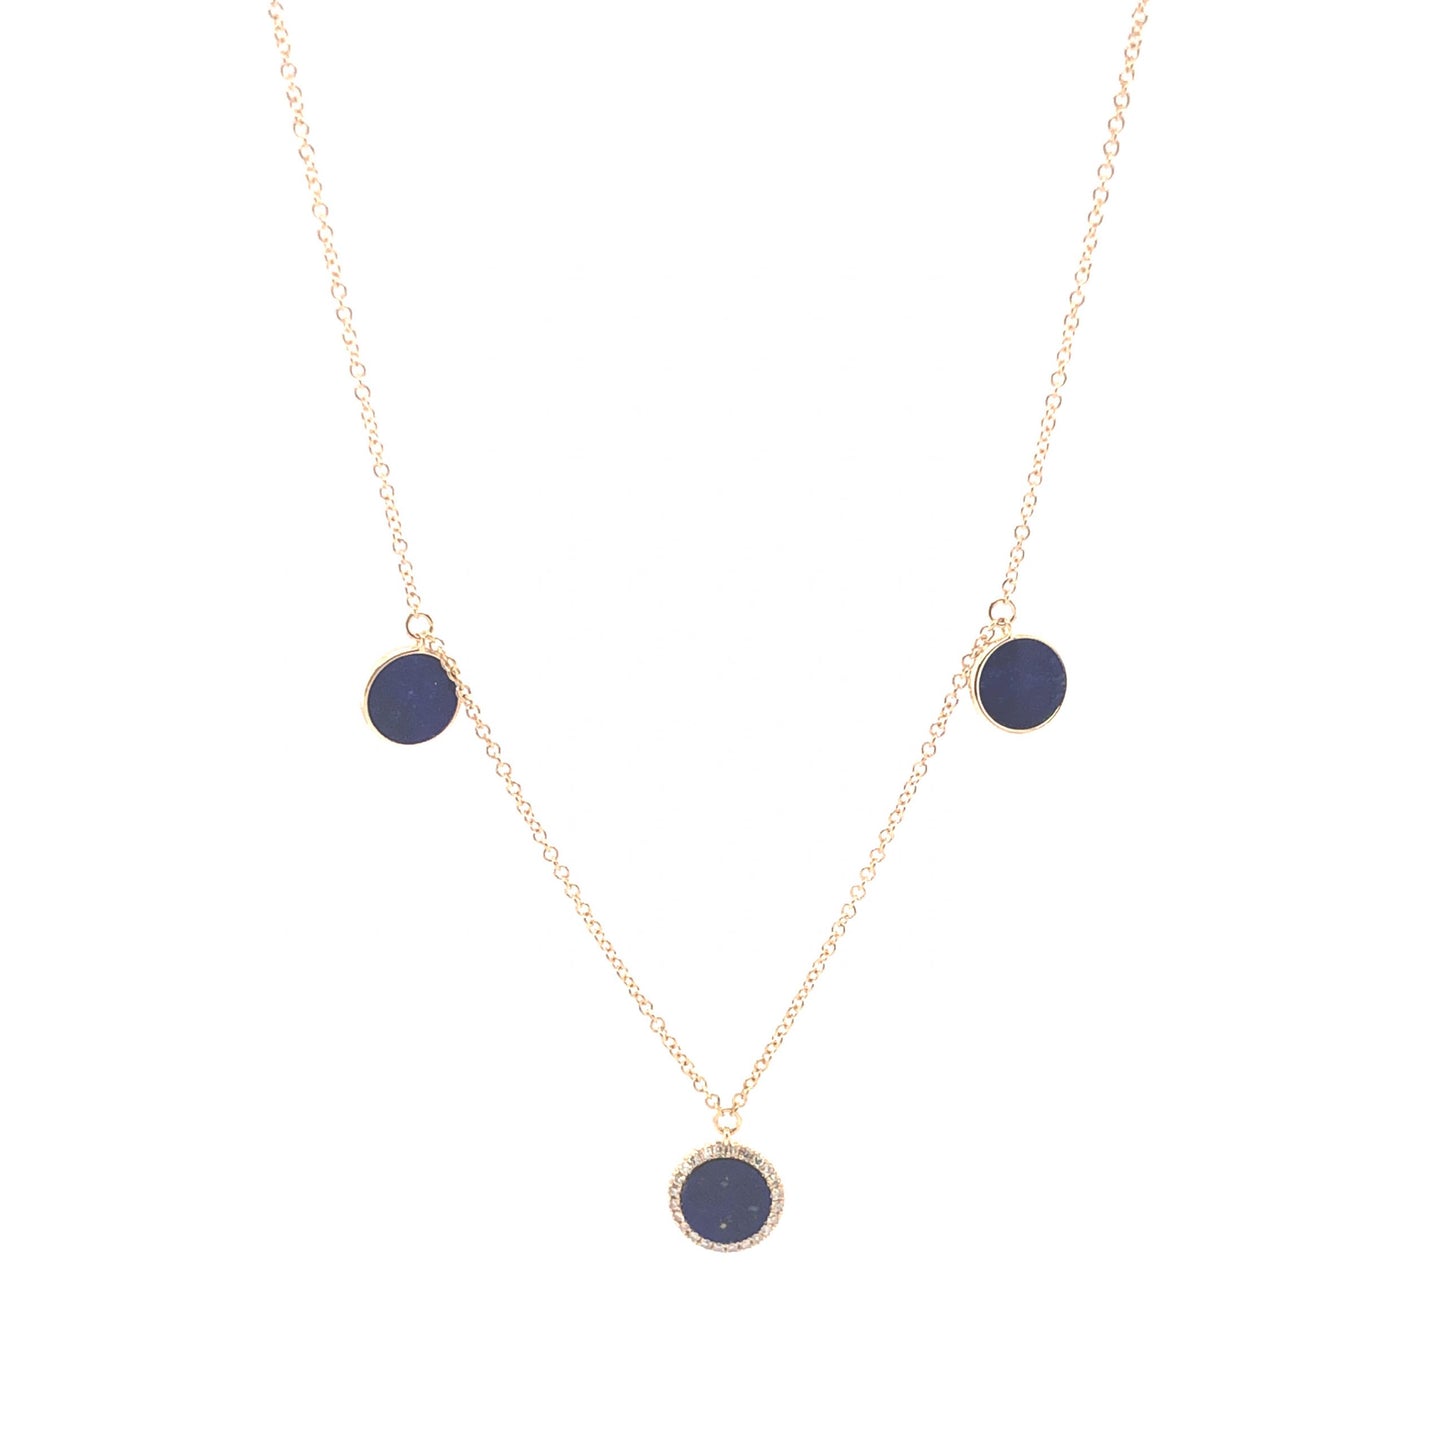 Round Cut Lapis Lazuli & Diamond Necklace in 14k Yellow Gold